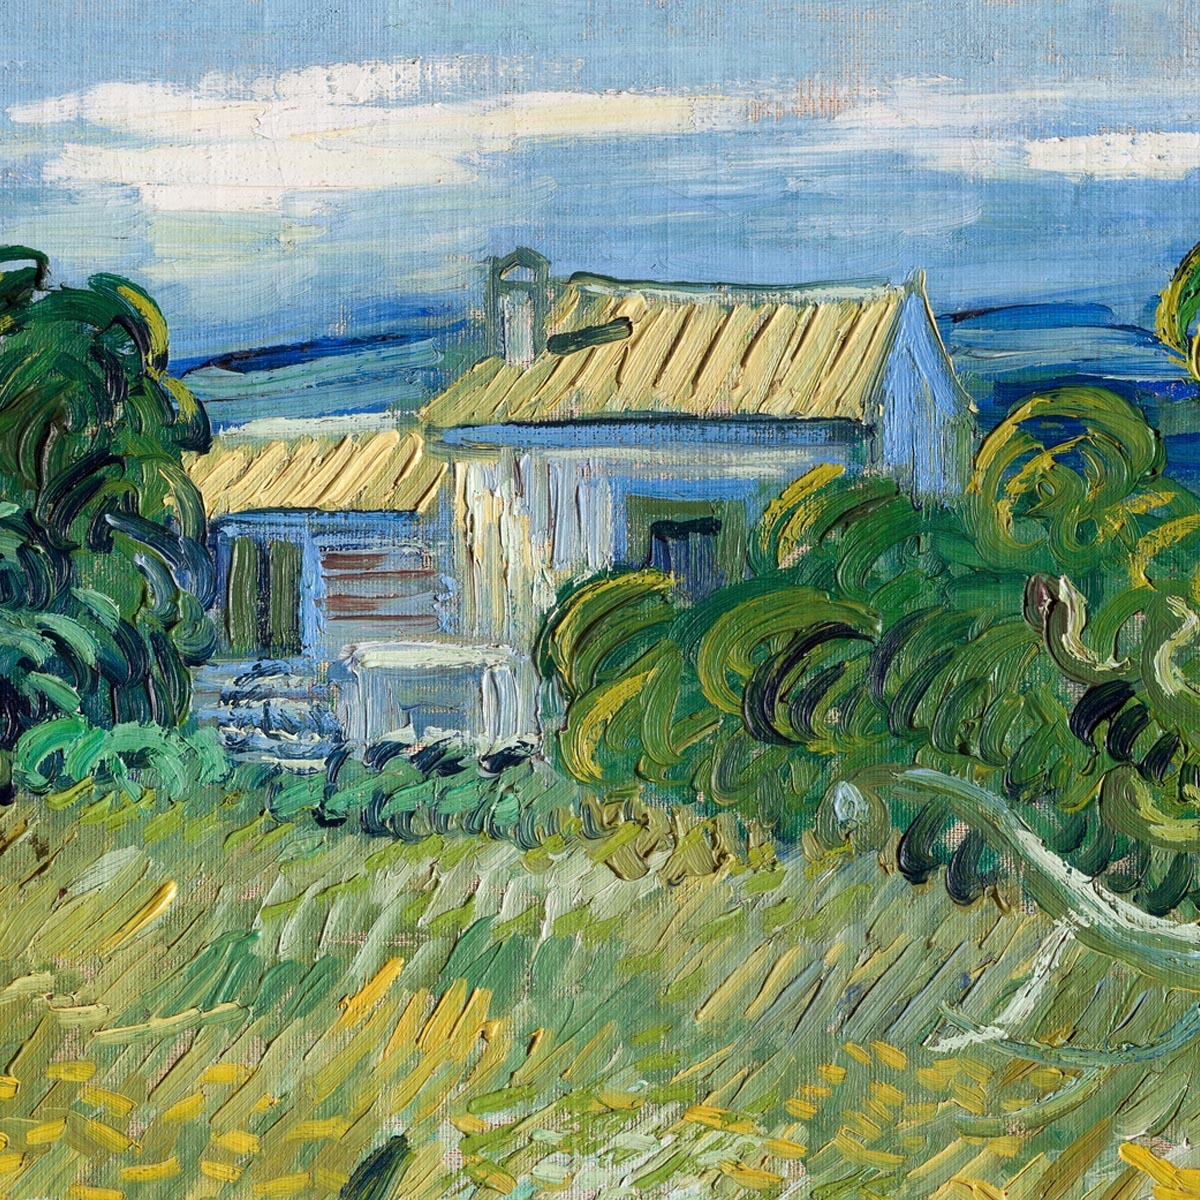 Green Wheat Field with Cypress Art Print by Van Gogh